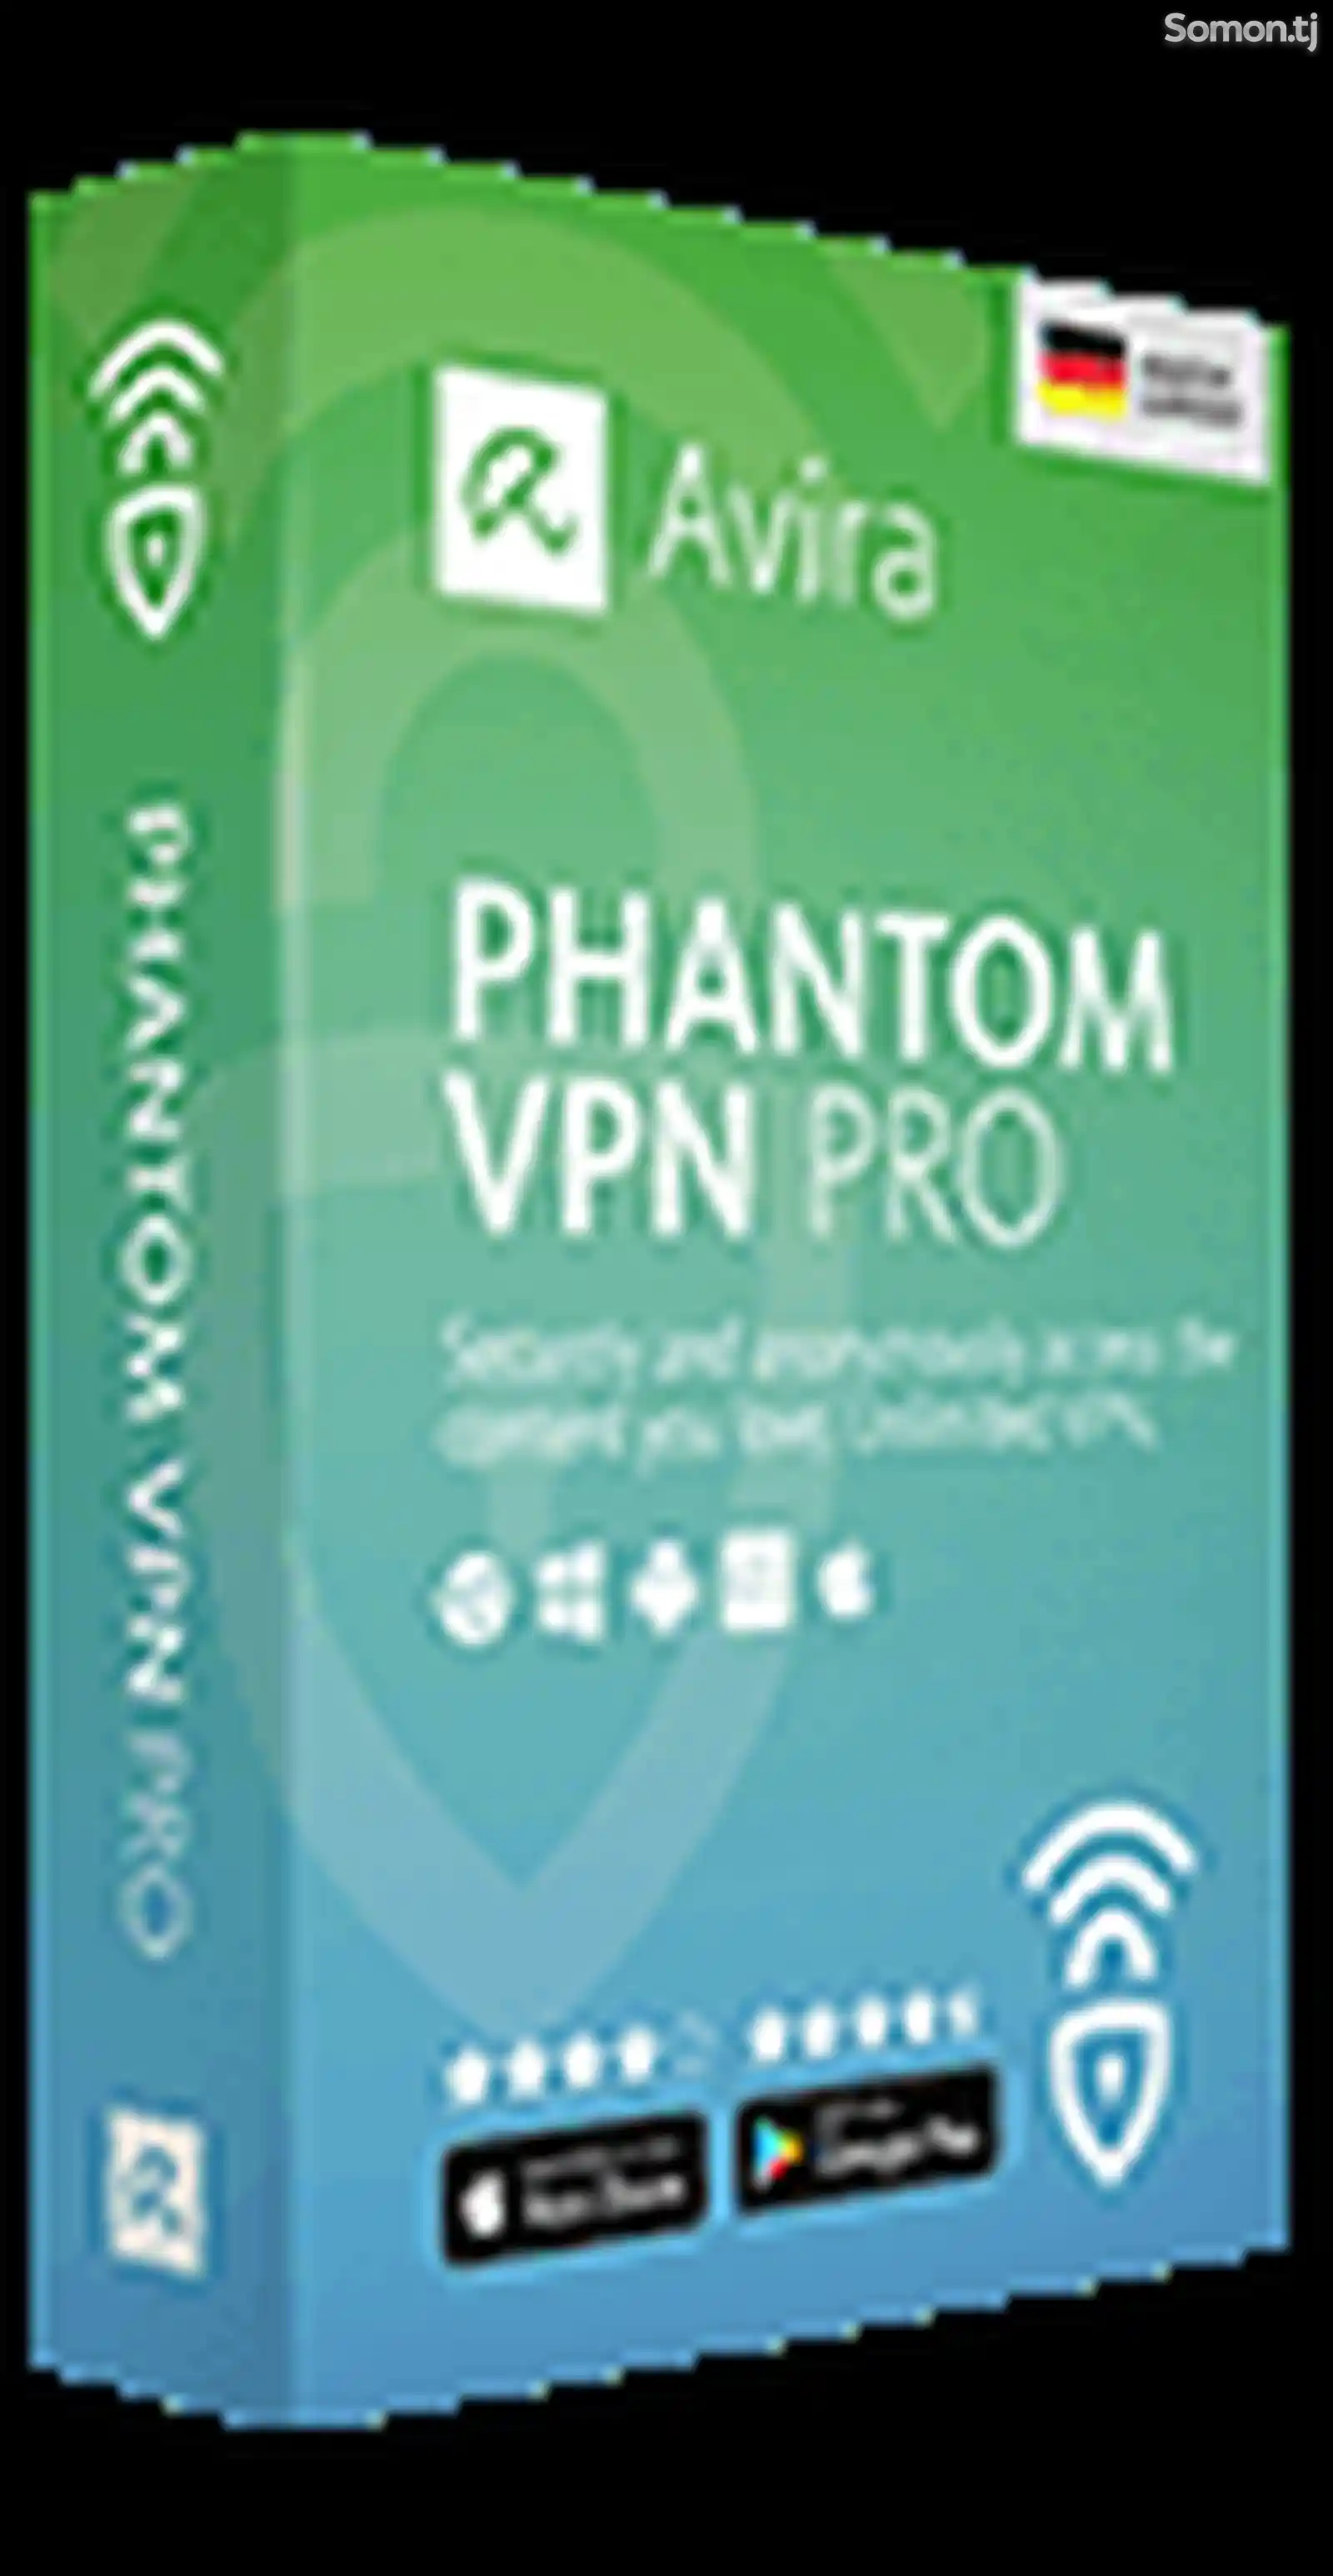 Avira Phantom VPN Pro - иҷозатнома барои 1 роёна, 1 сол